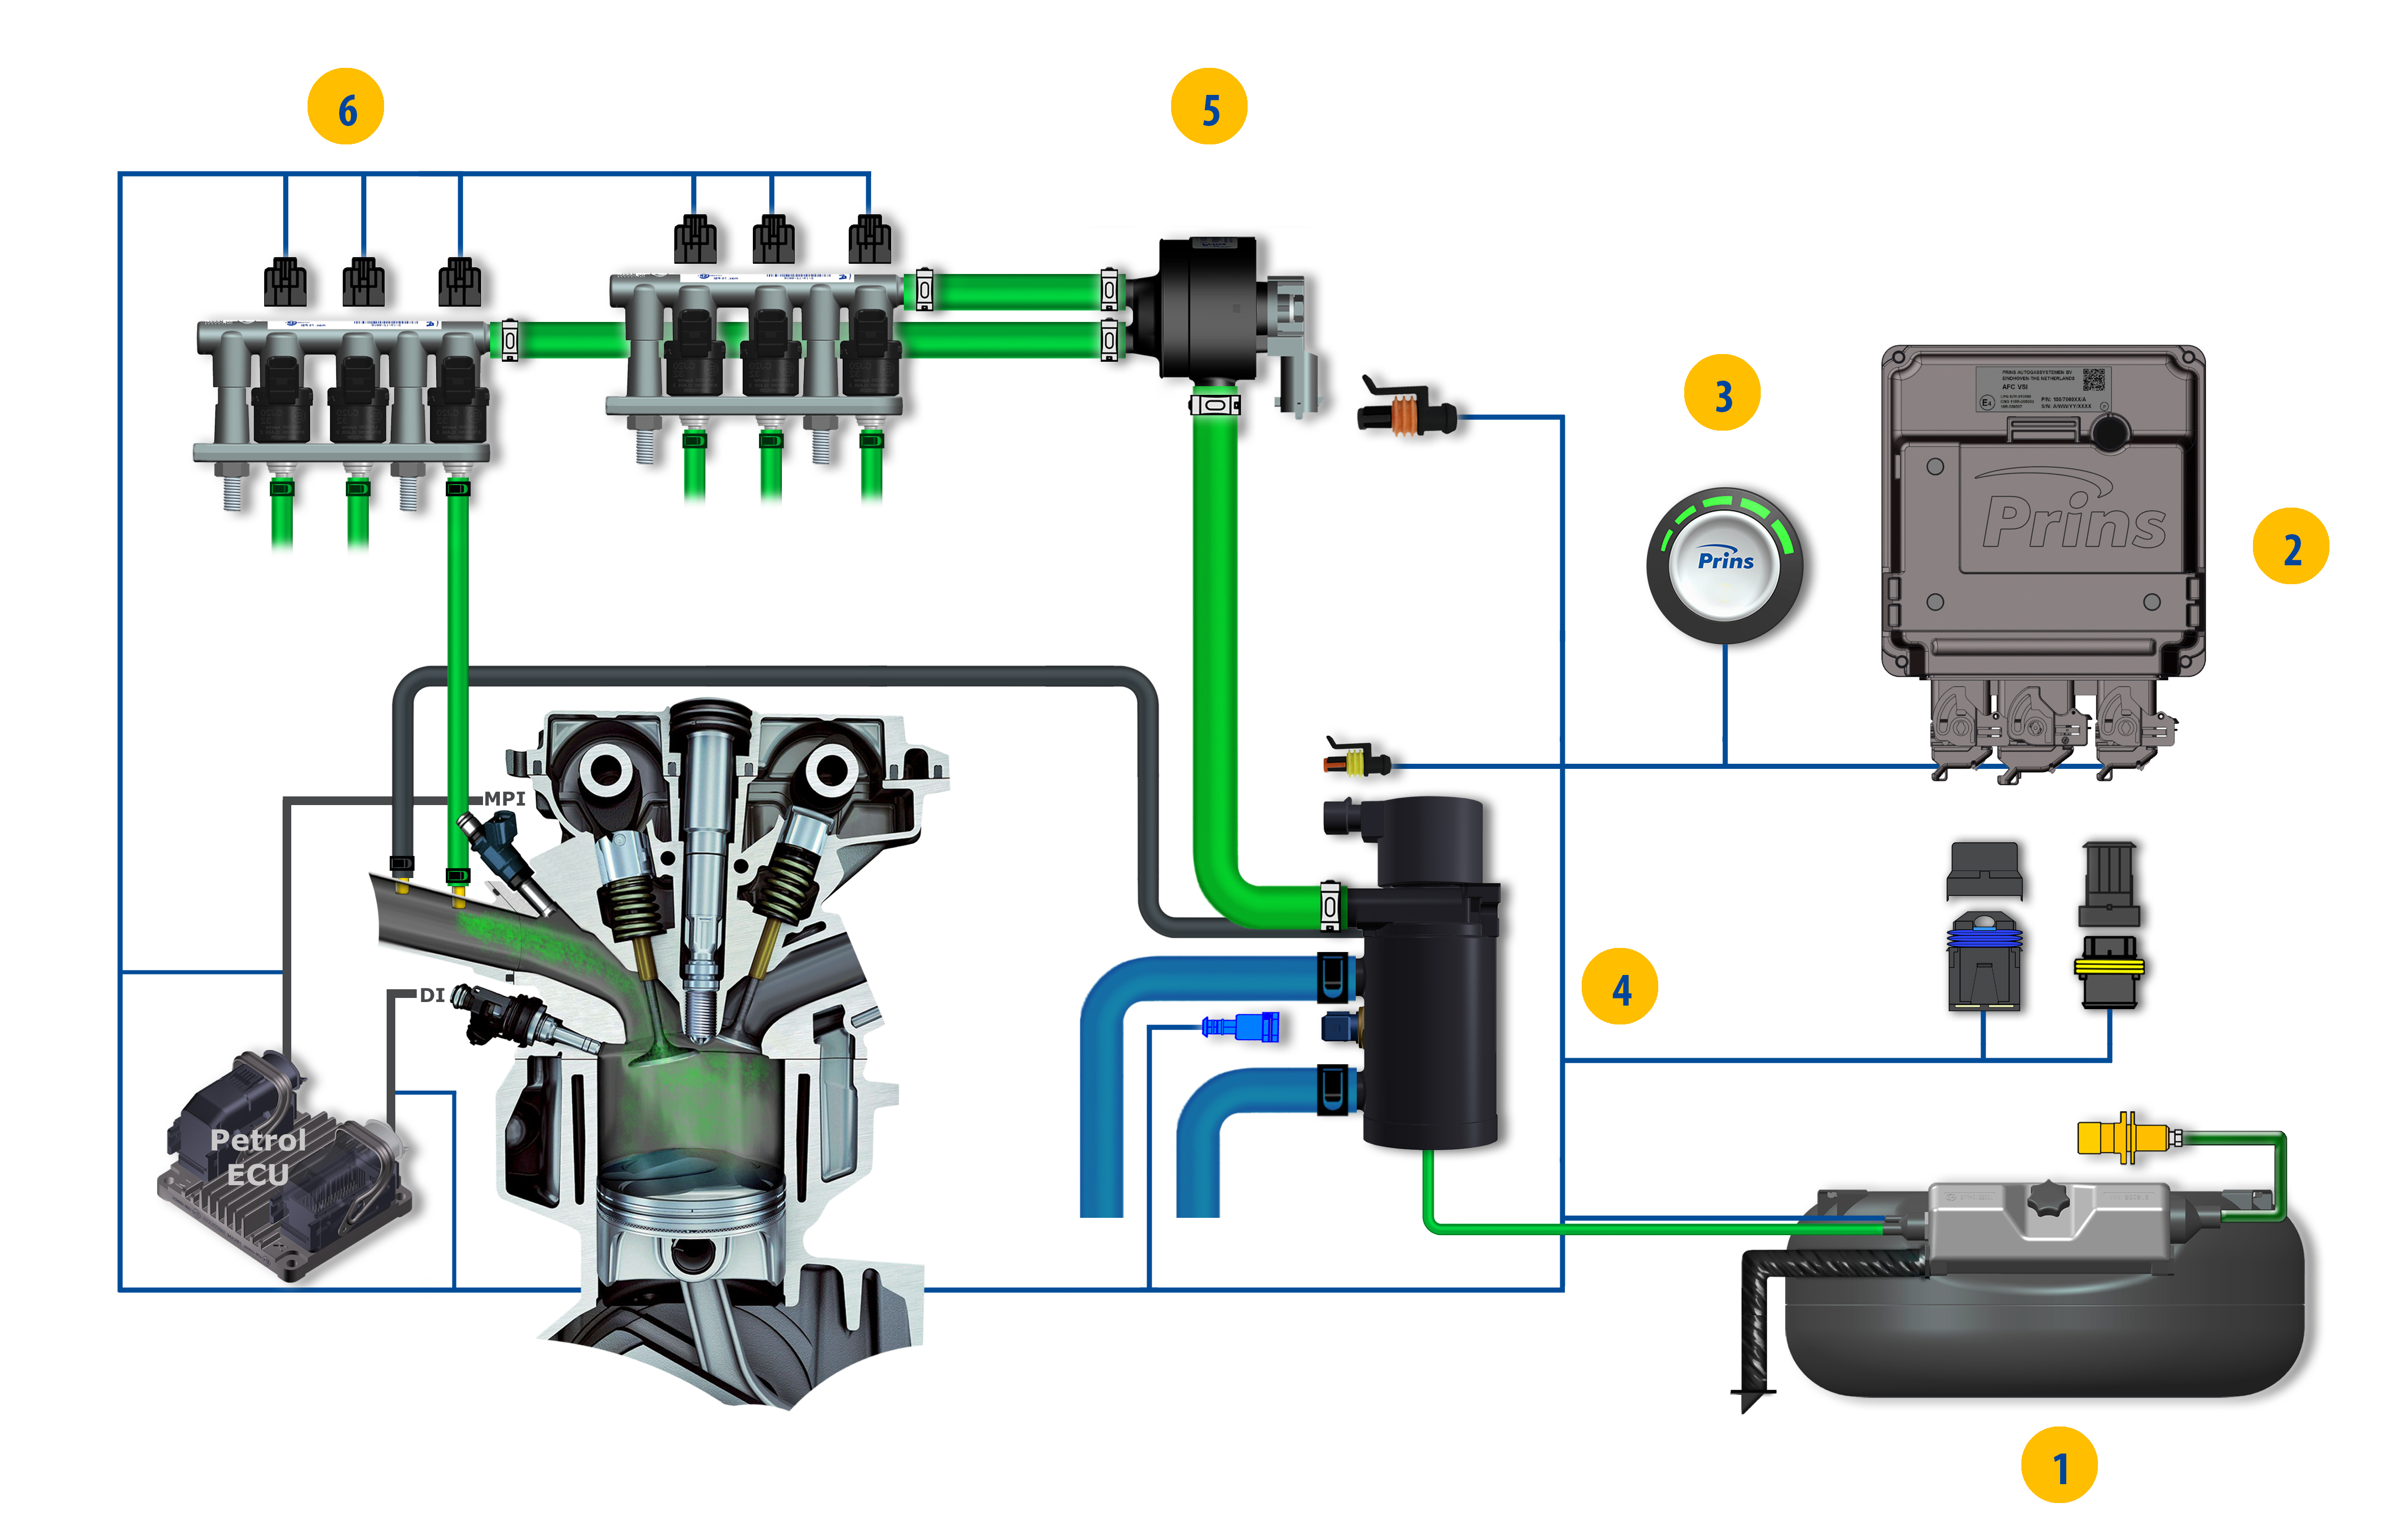 Service on your Prins LPG system | Autogassystemen